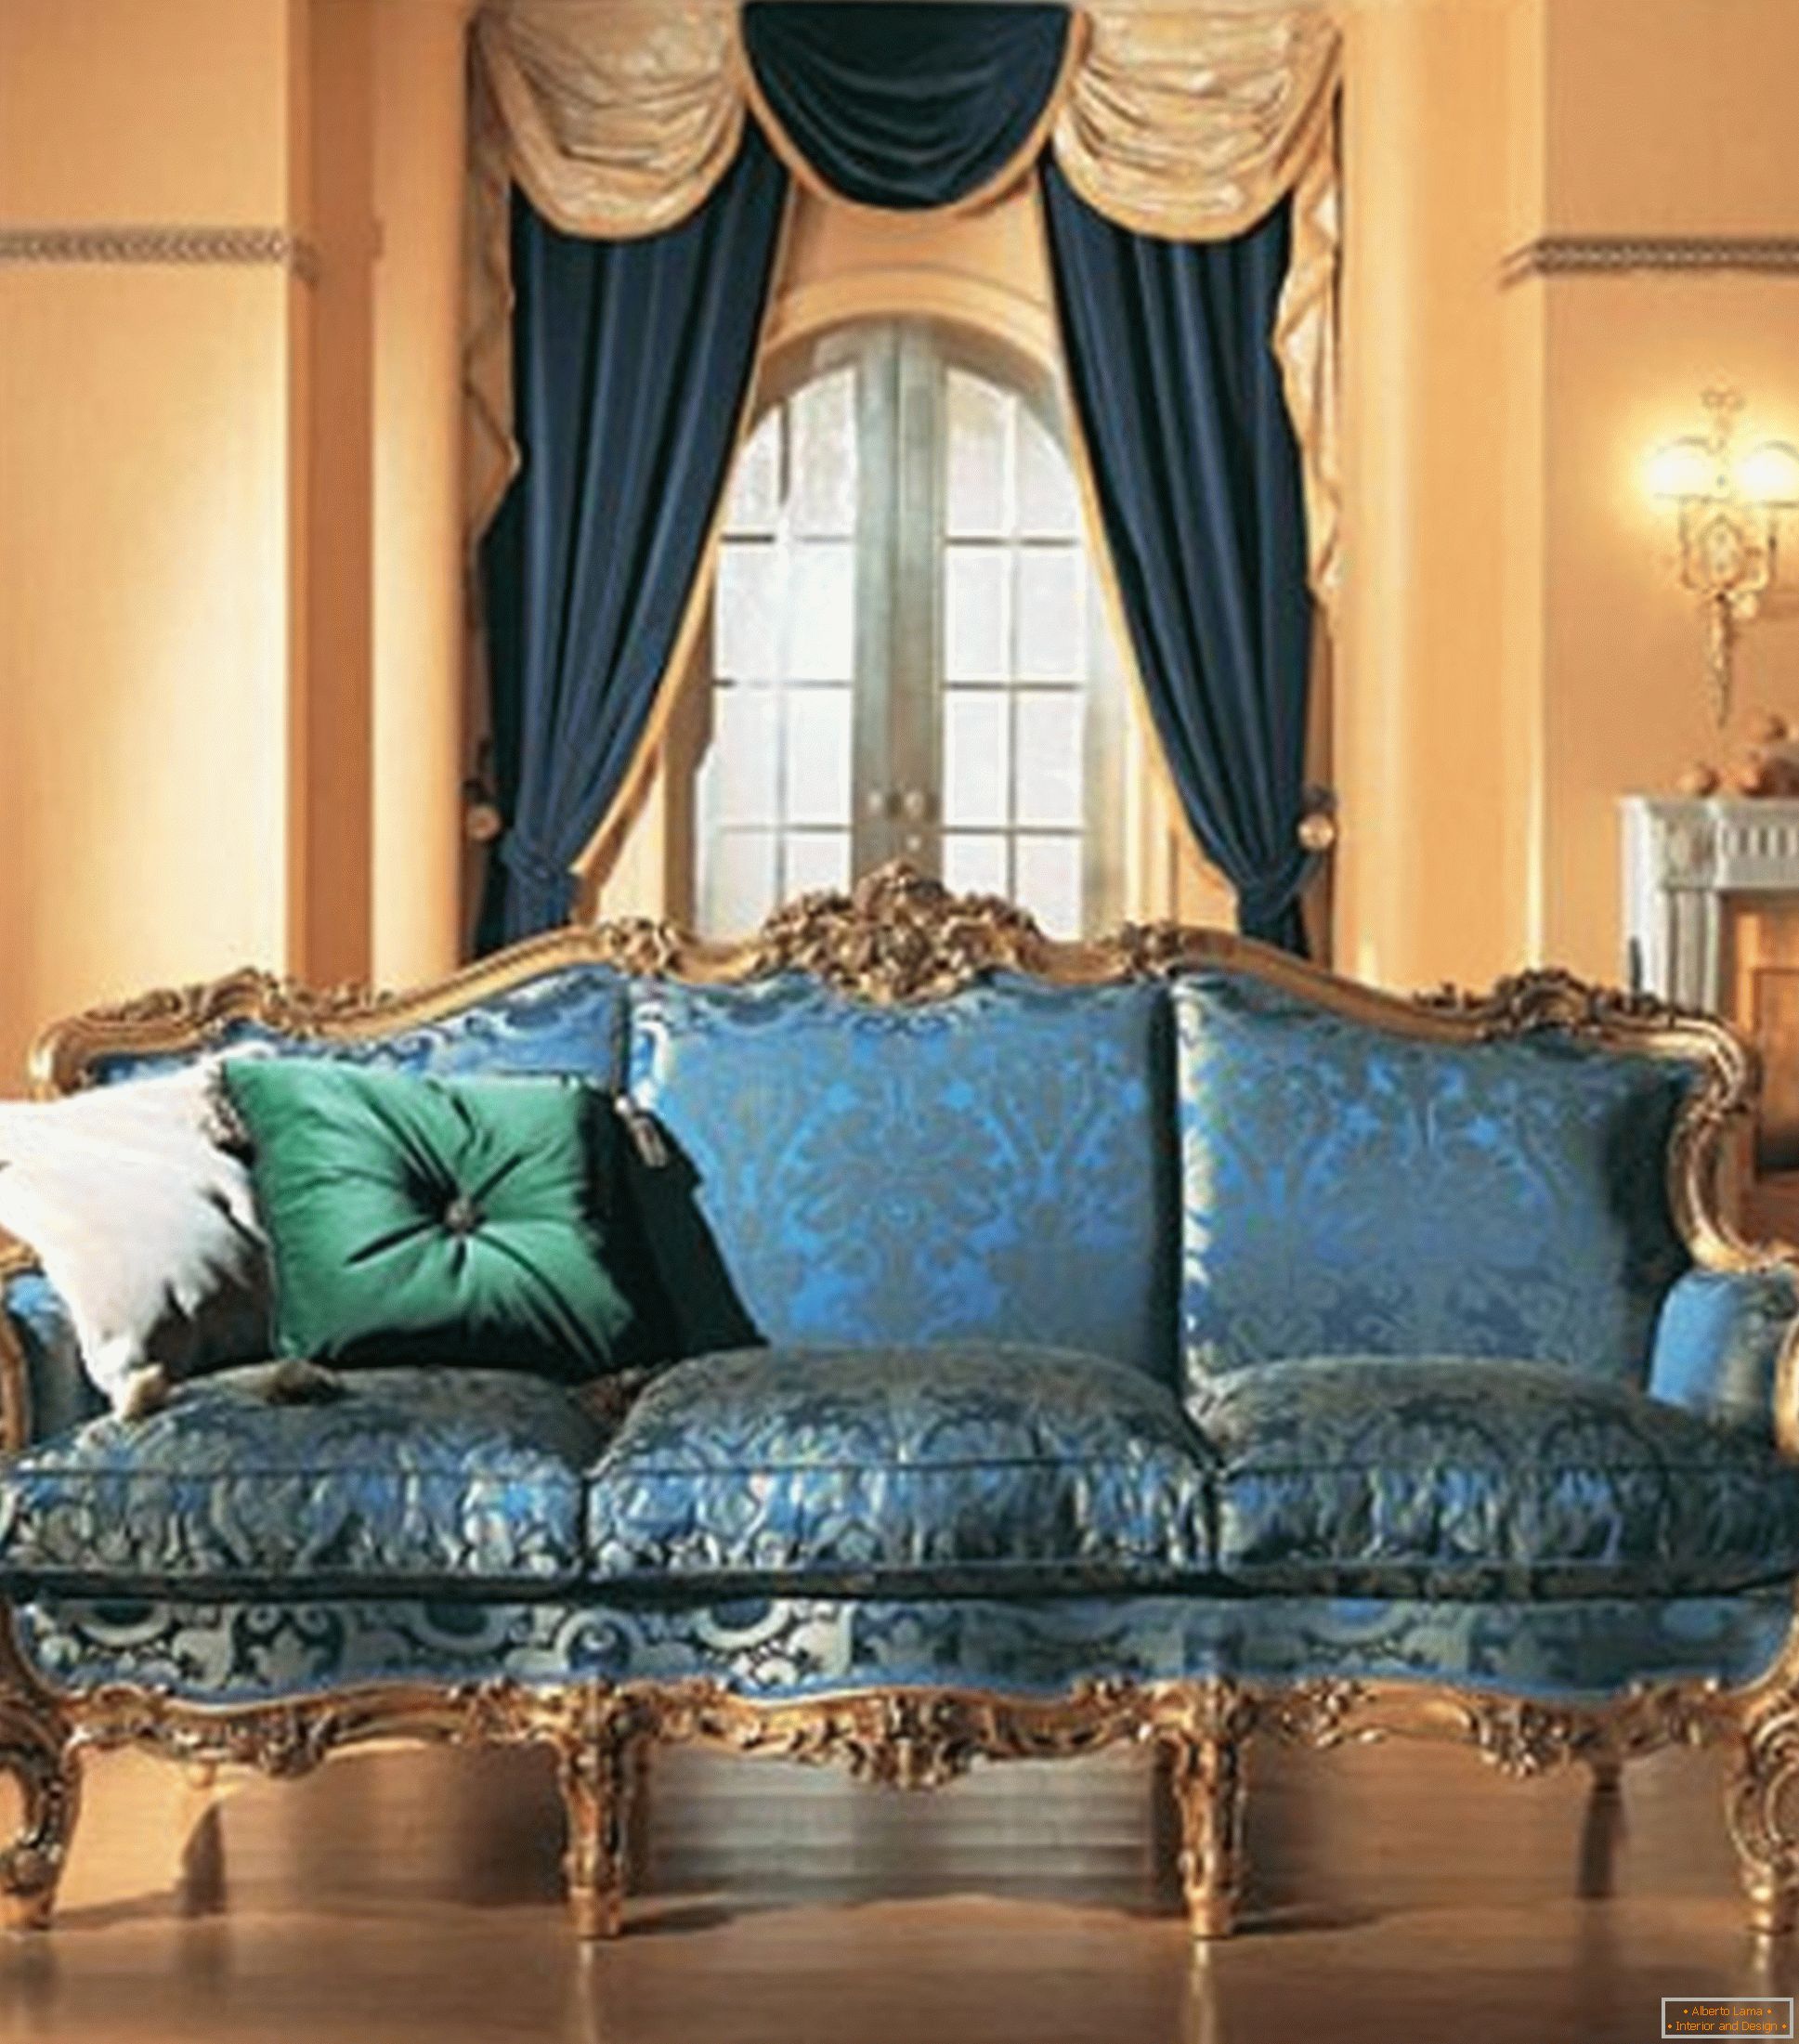 Kombinacija kontrastnih boja u dekoraciji dnevne sobe u baroknom stilu.